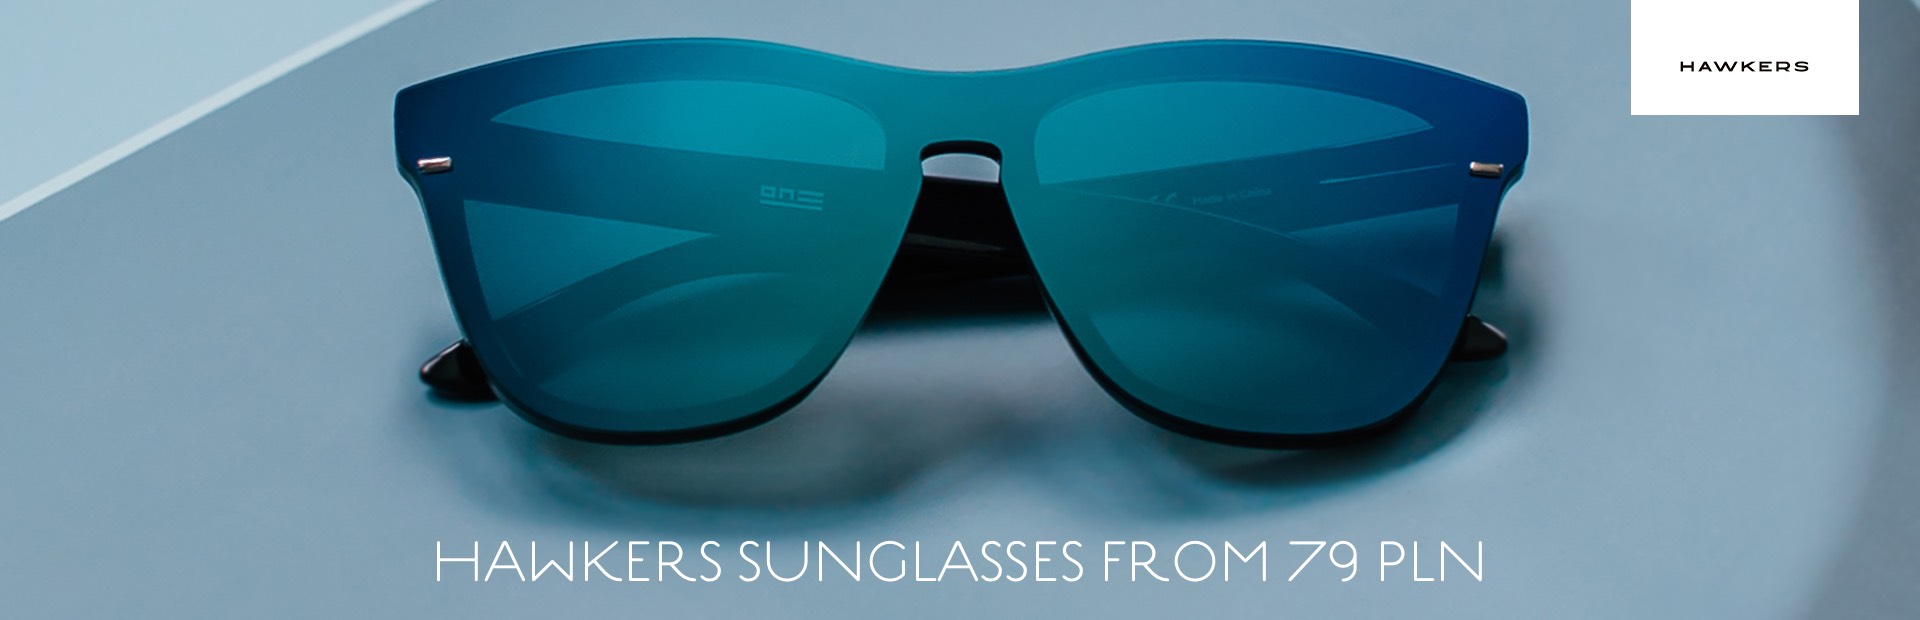 Hawker sunglasses from price 79pln